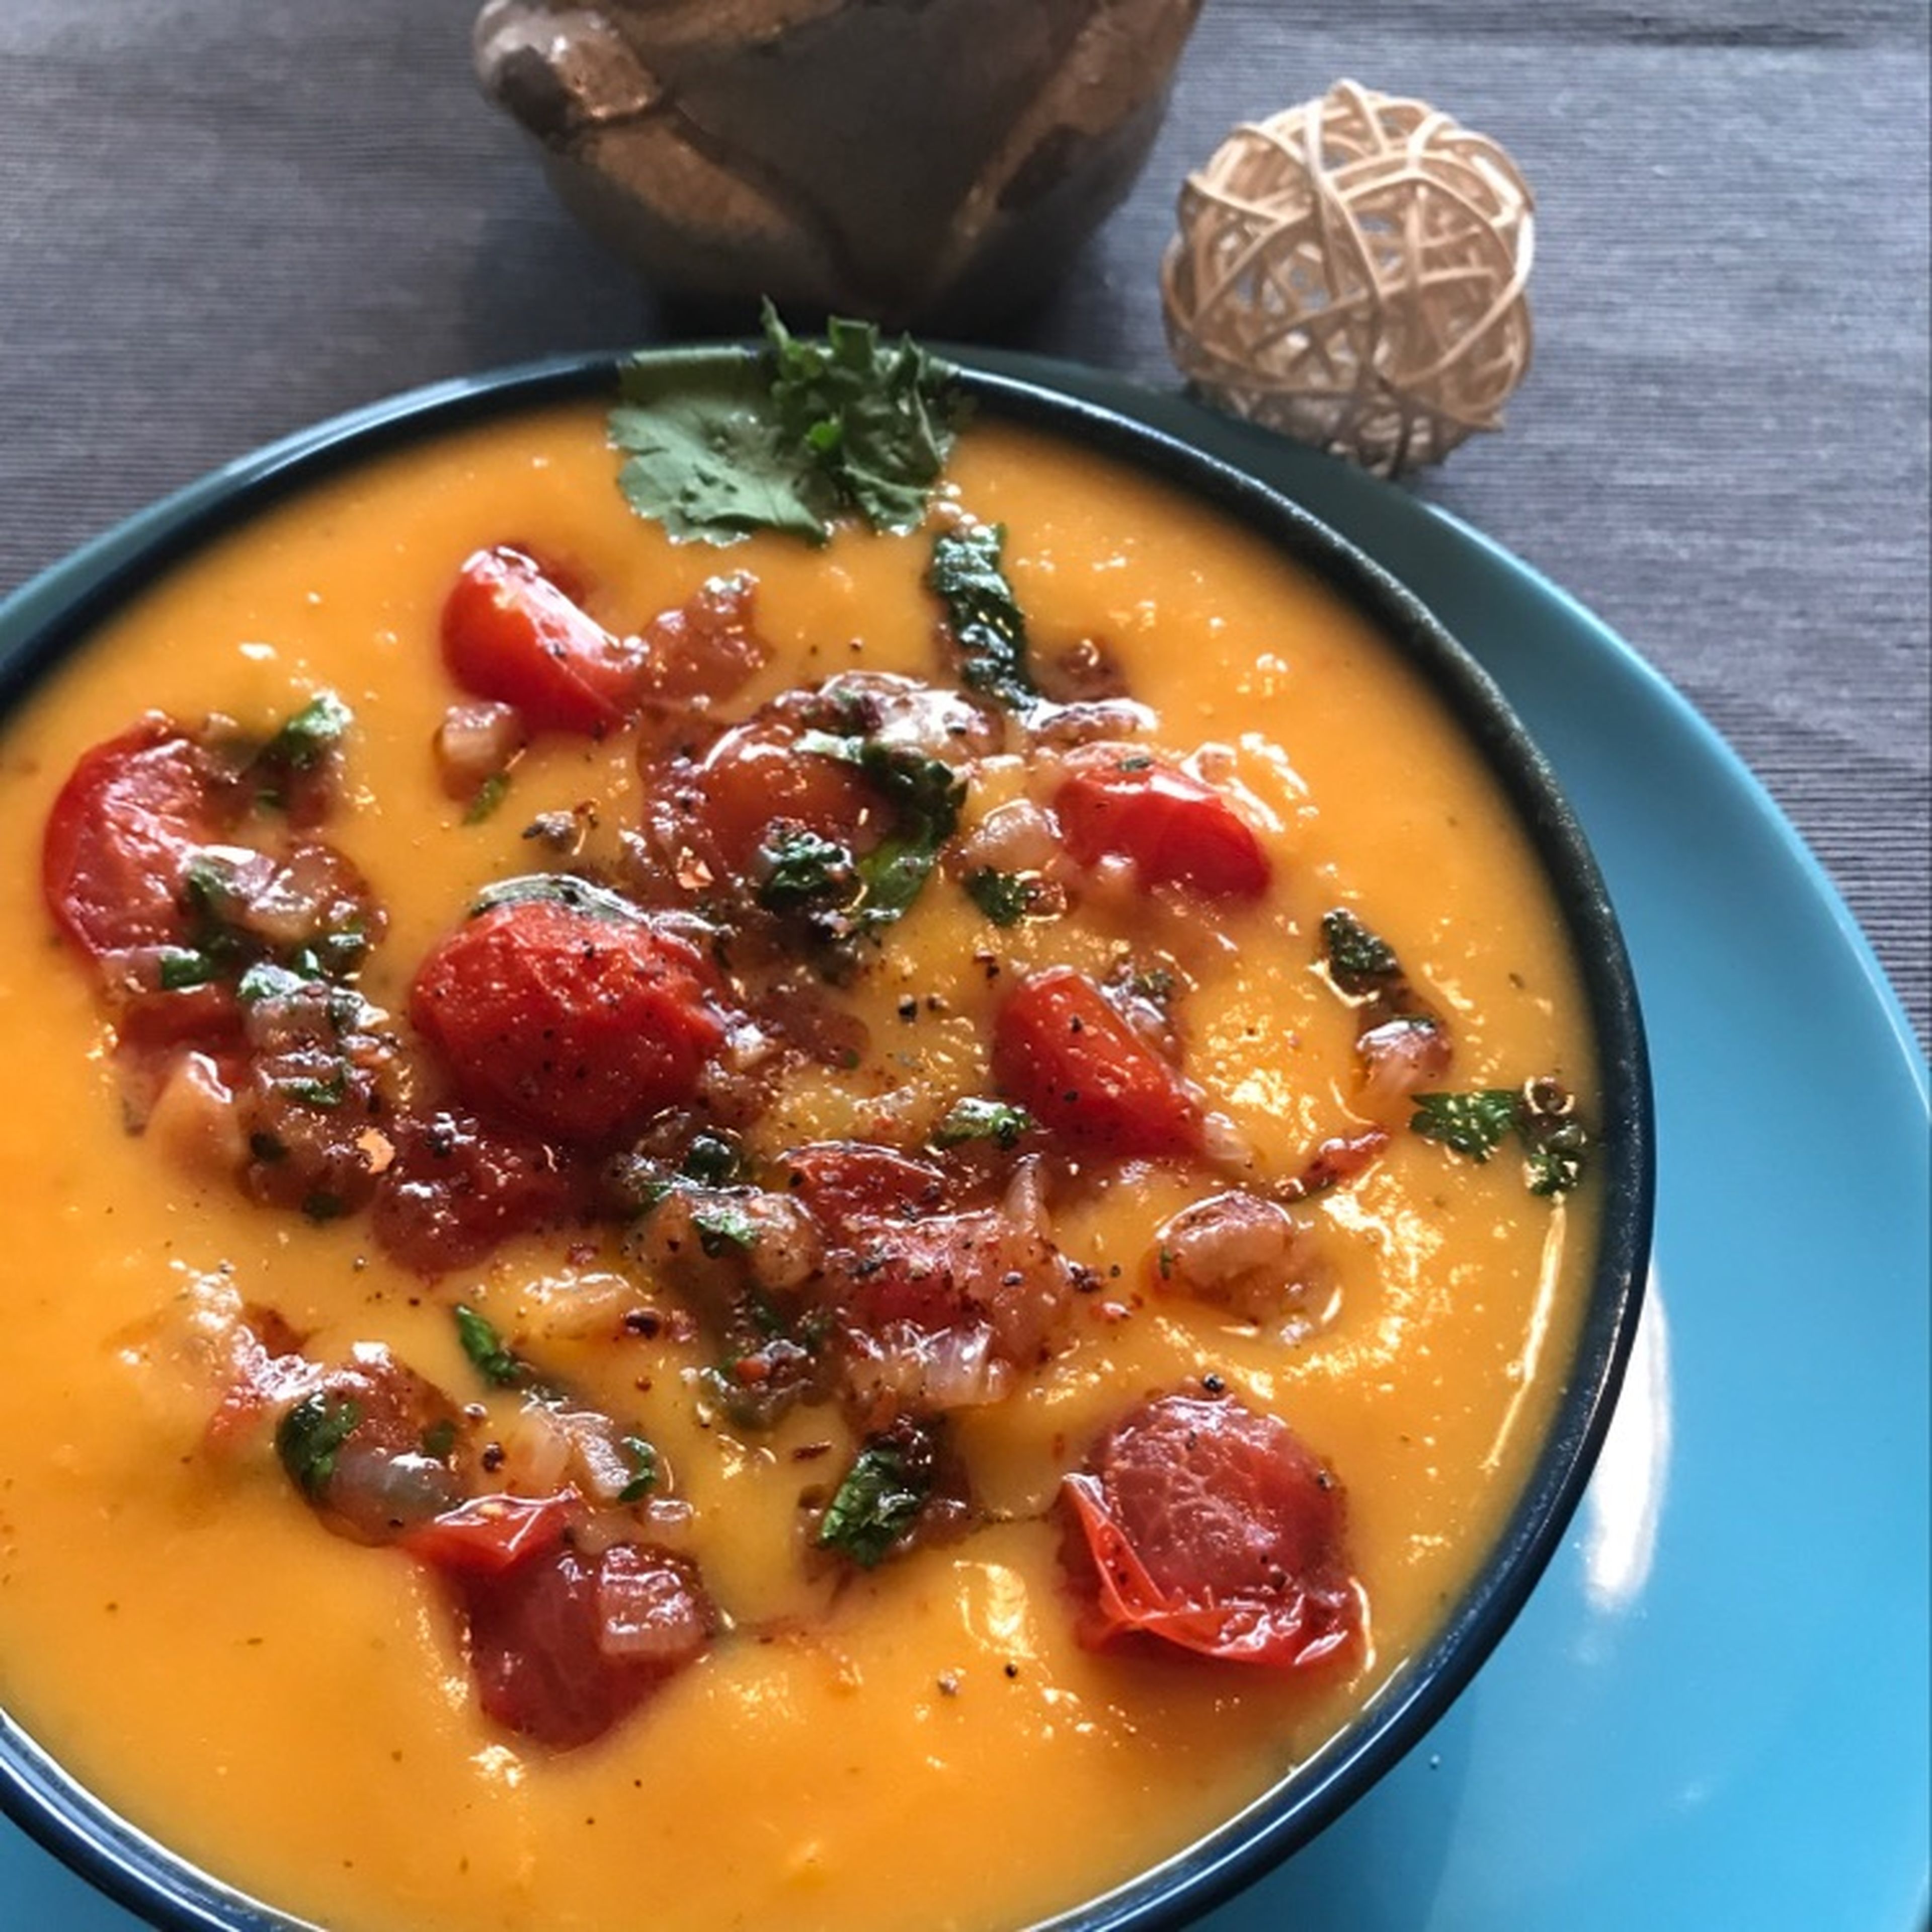 Sweet potato soup with chili tomatoes